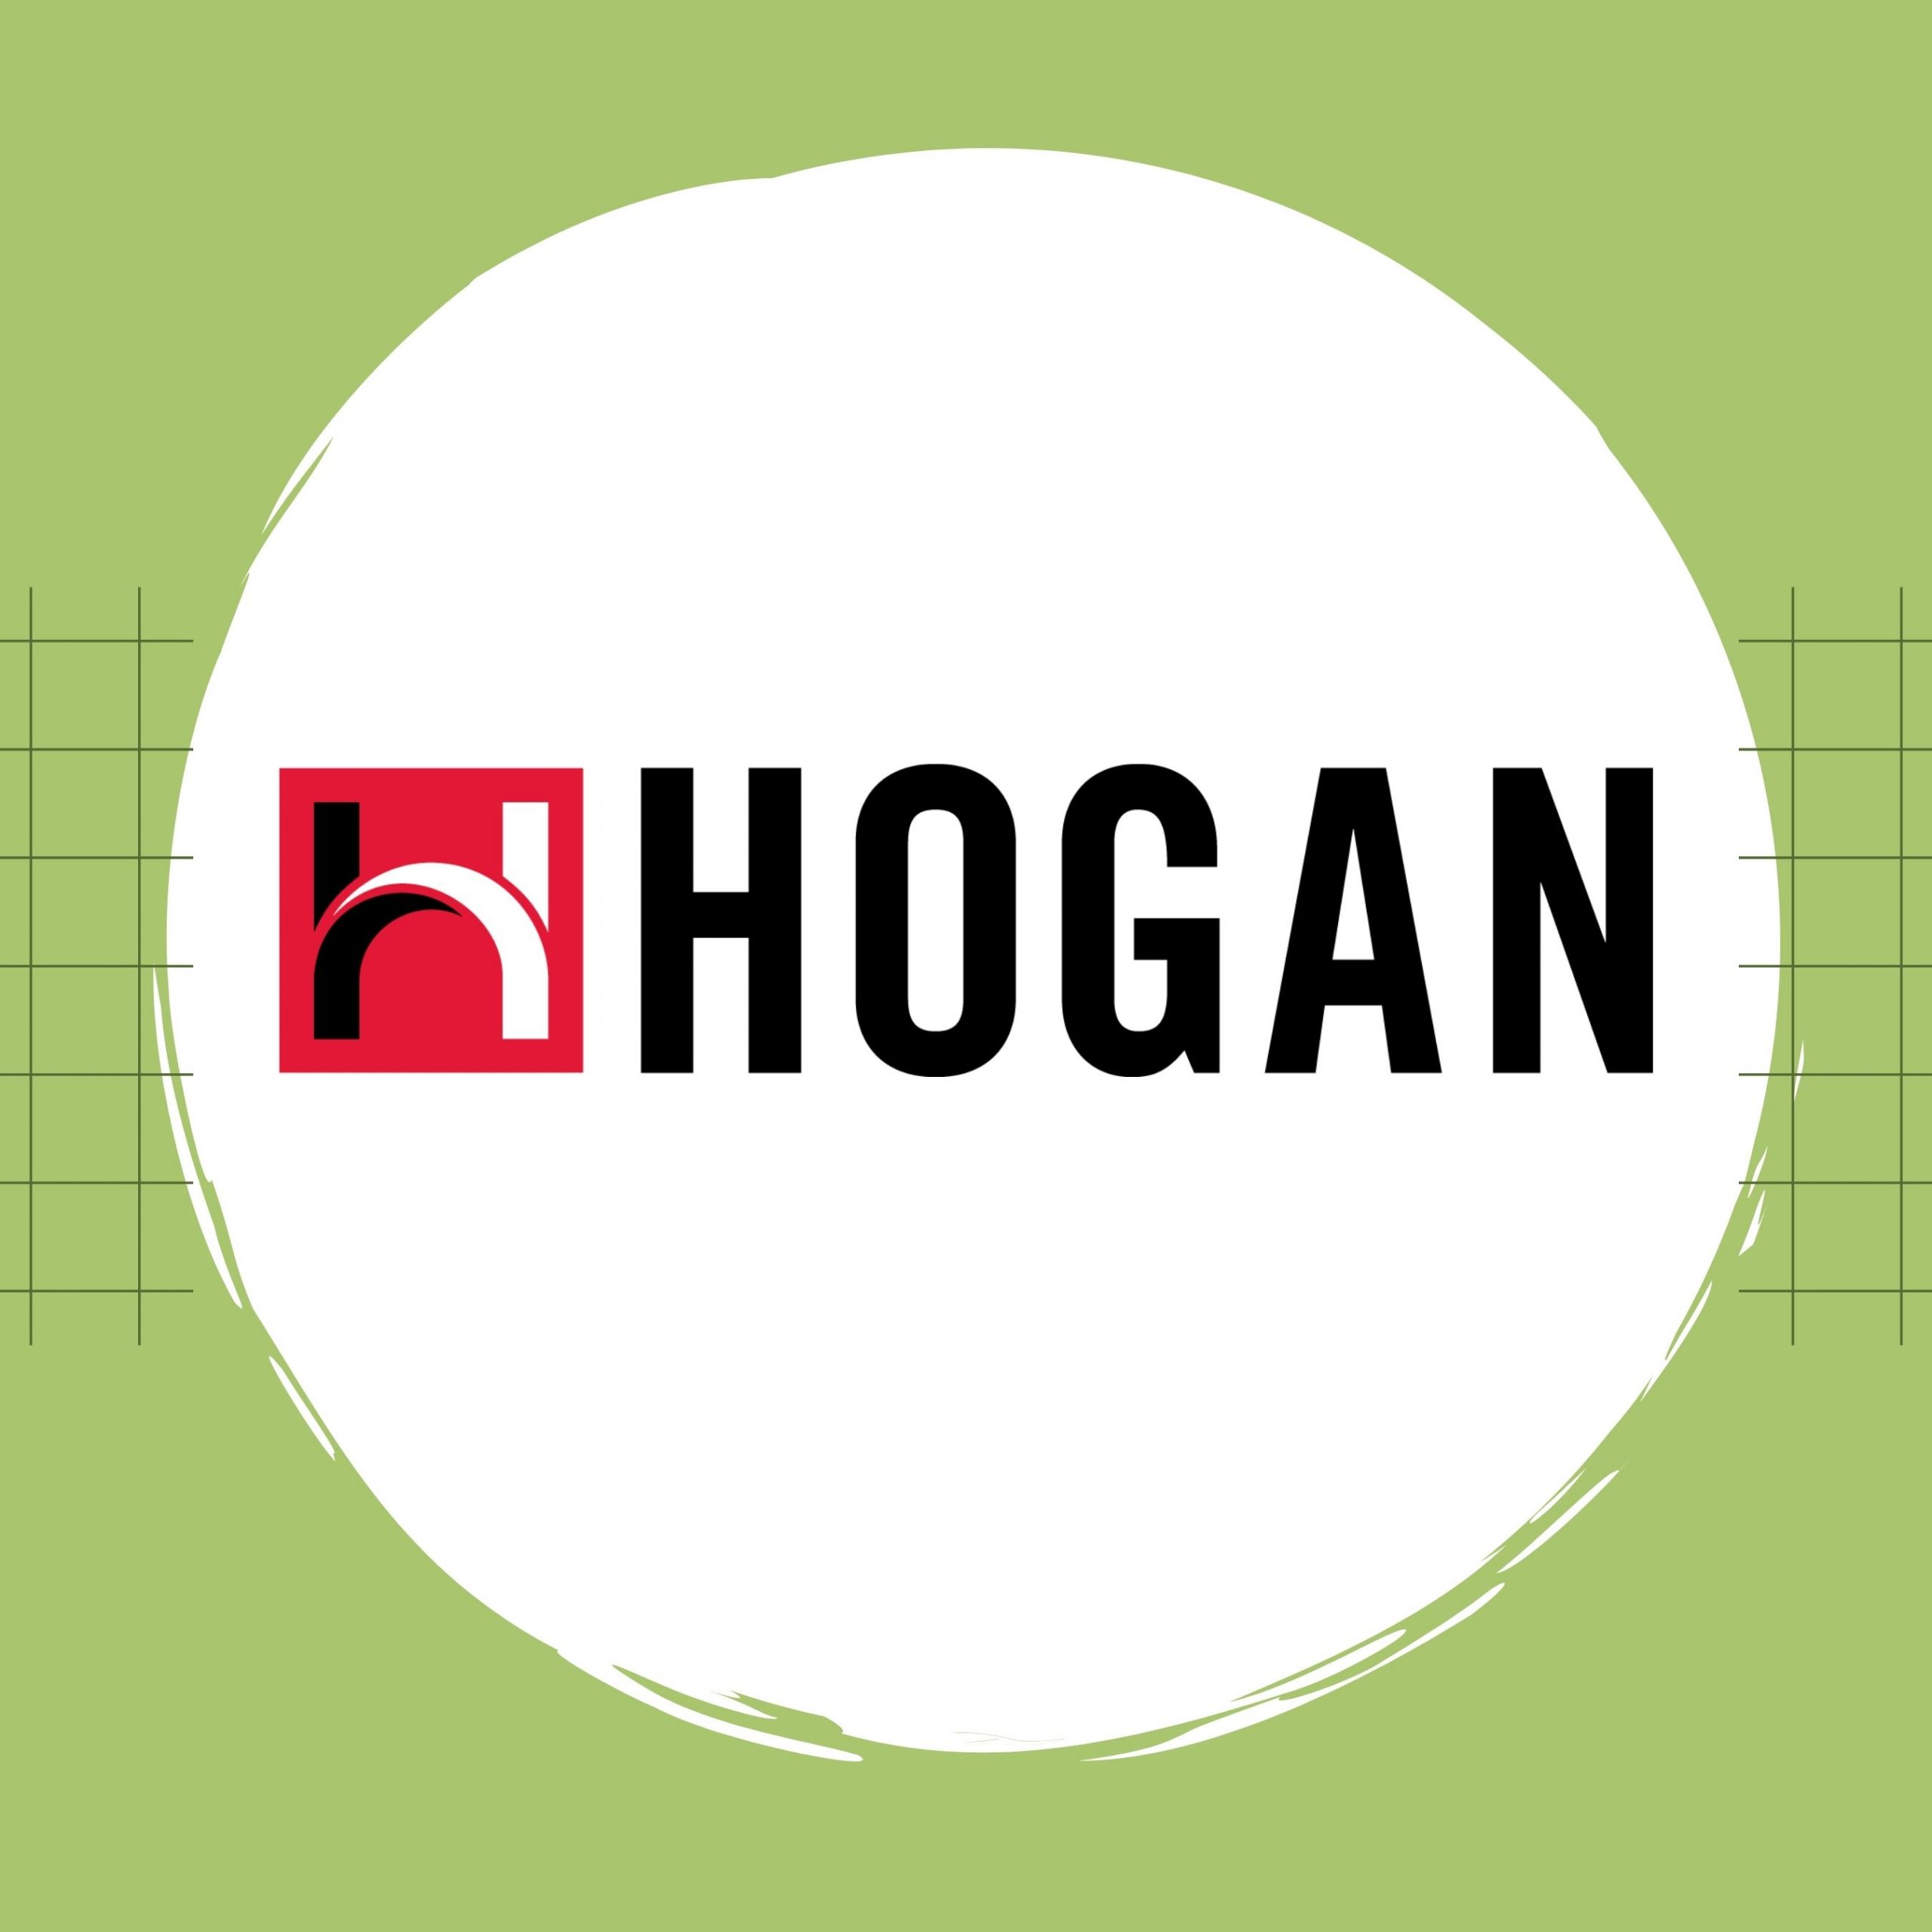 Hogan assessments